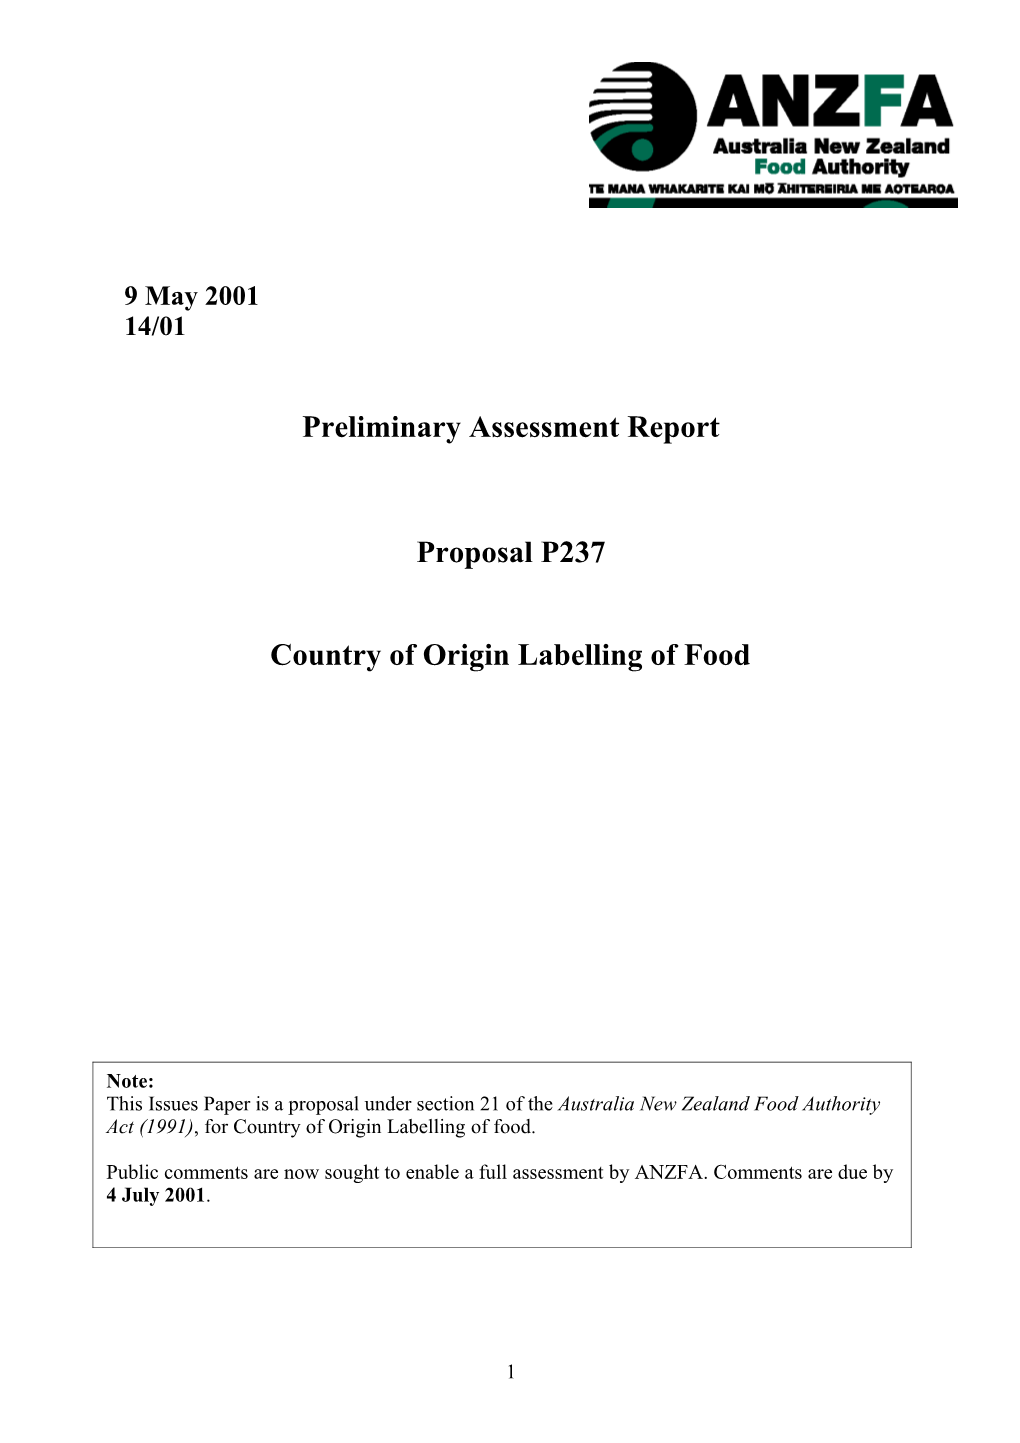 Australia New Zealand Food Authority Advisory Committee